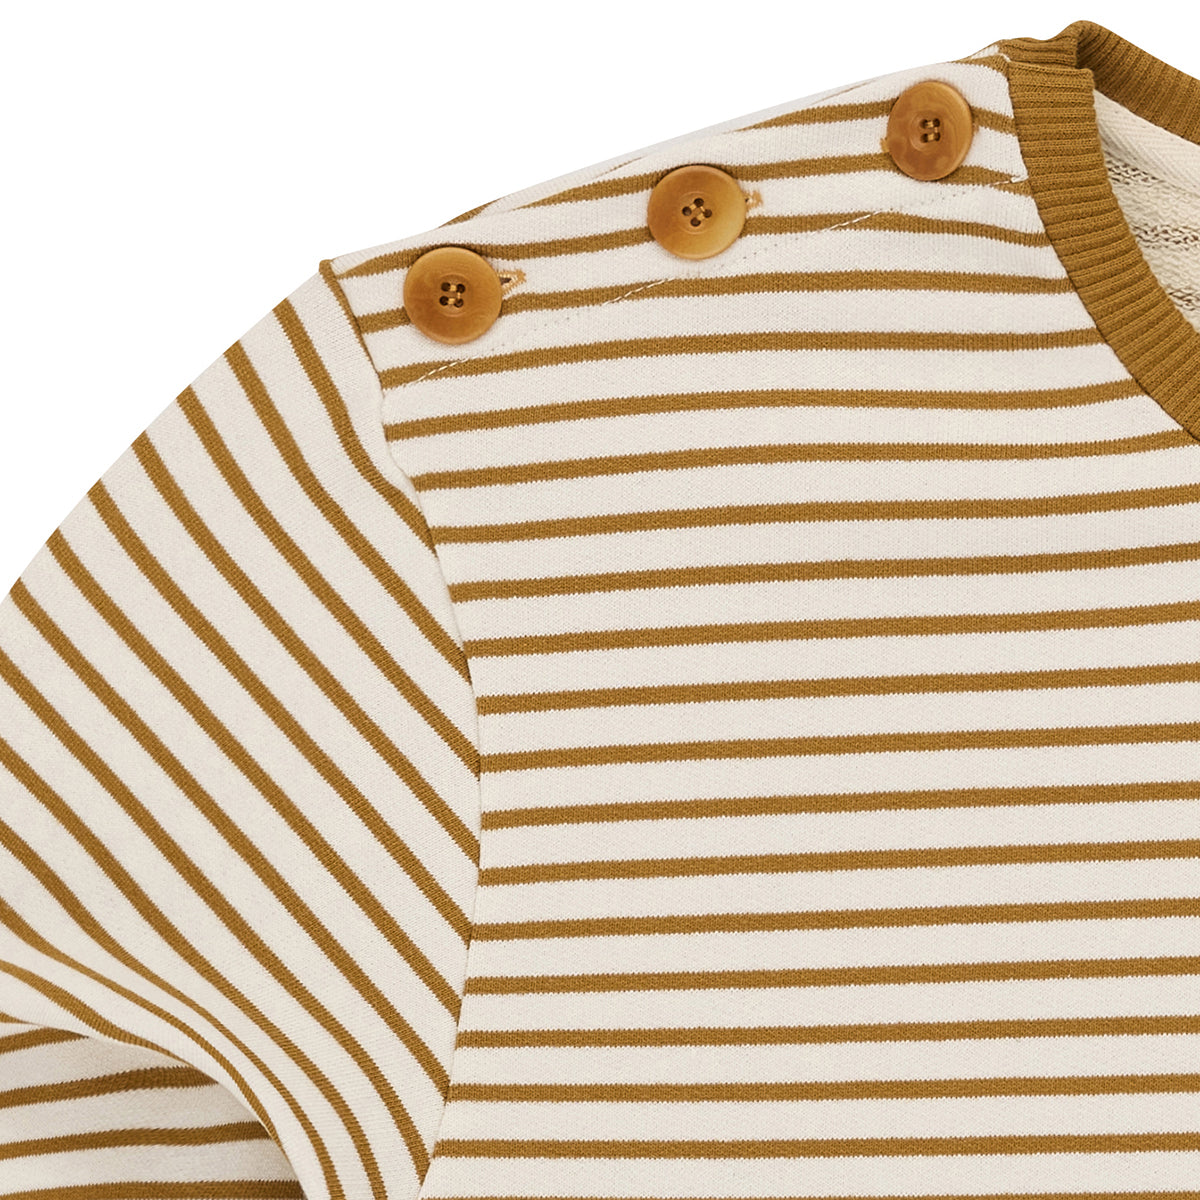 Inigo sweater stripe gold - Bask in the sun